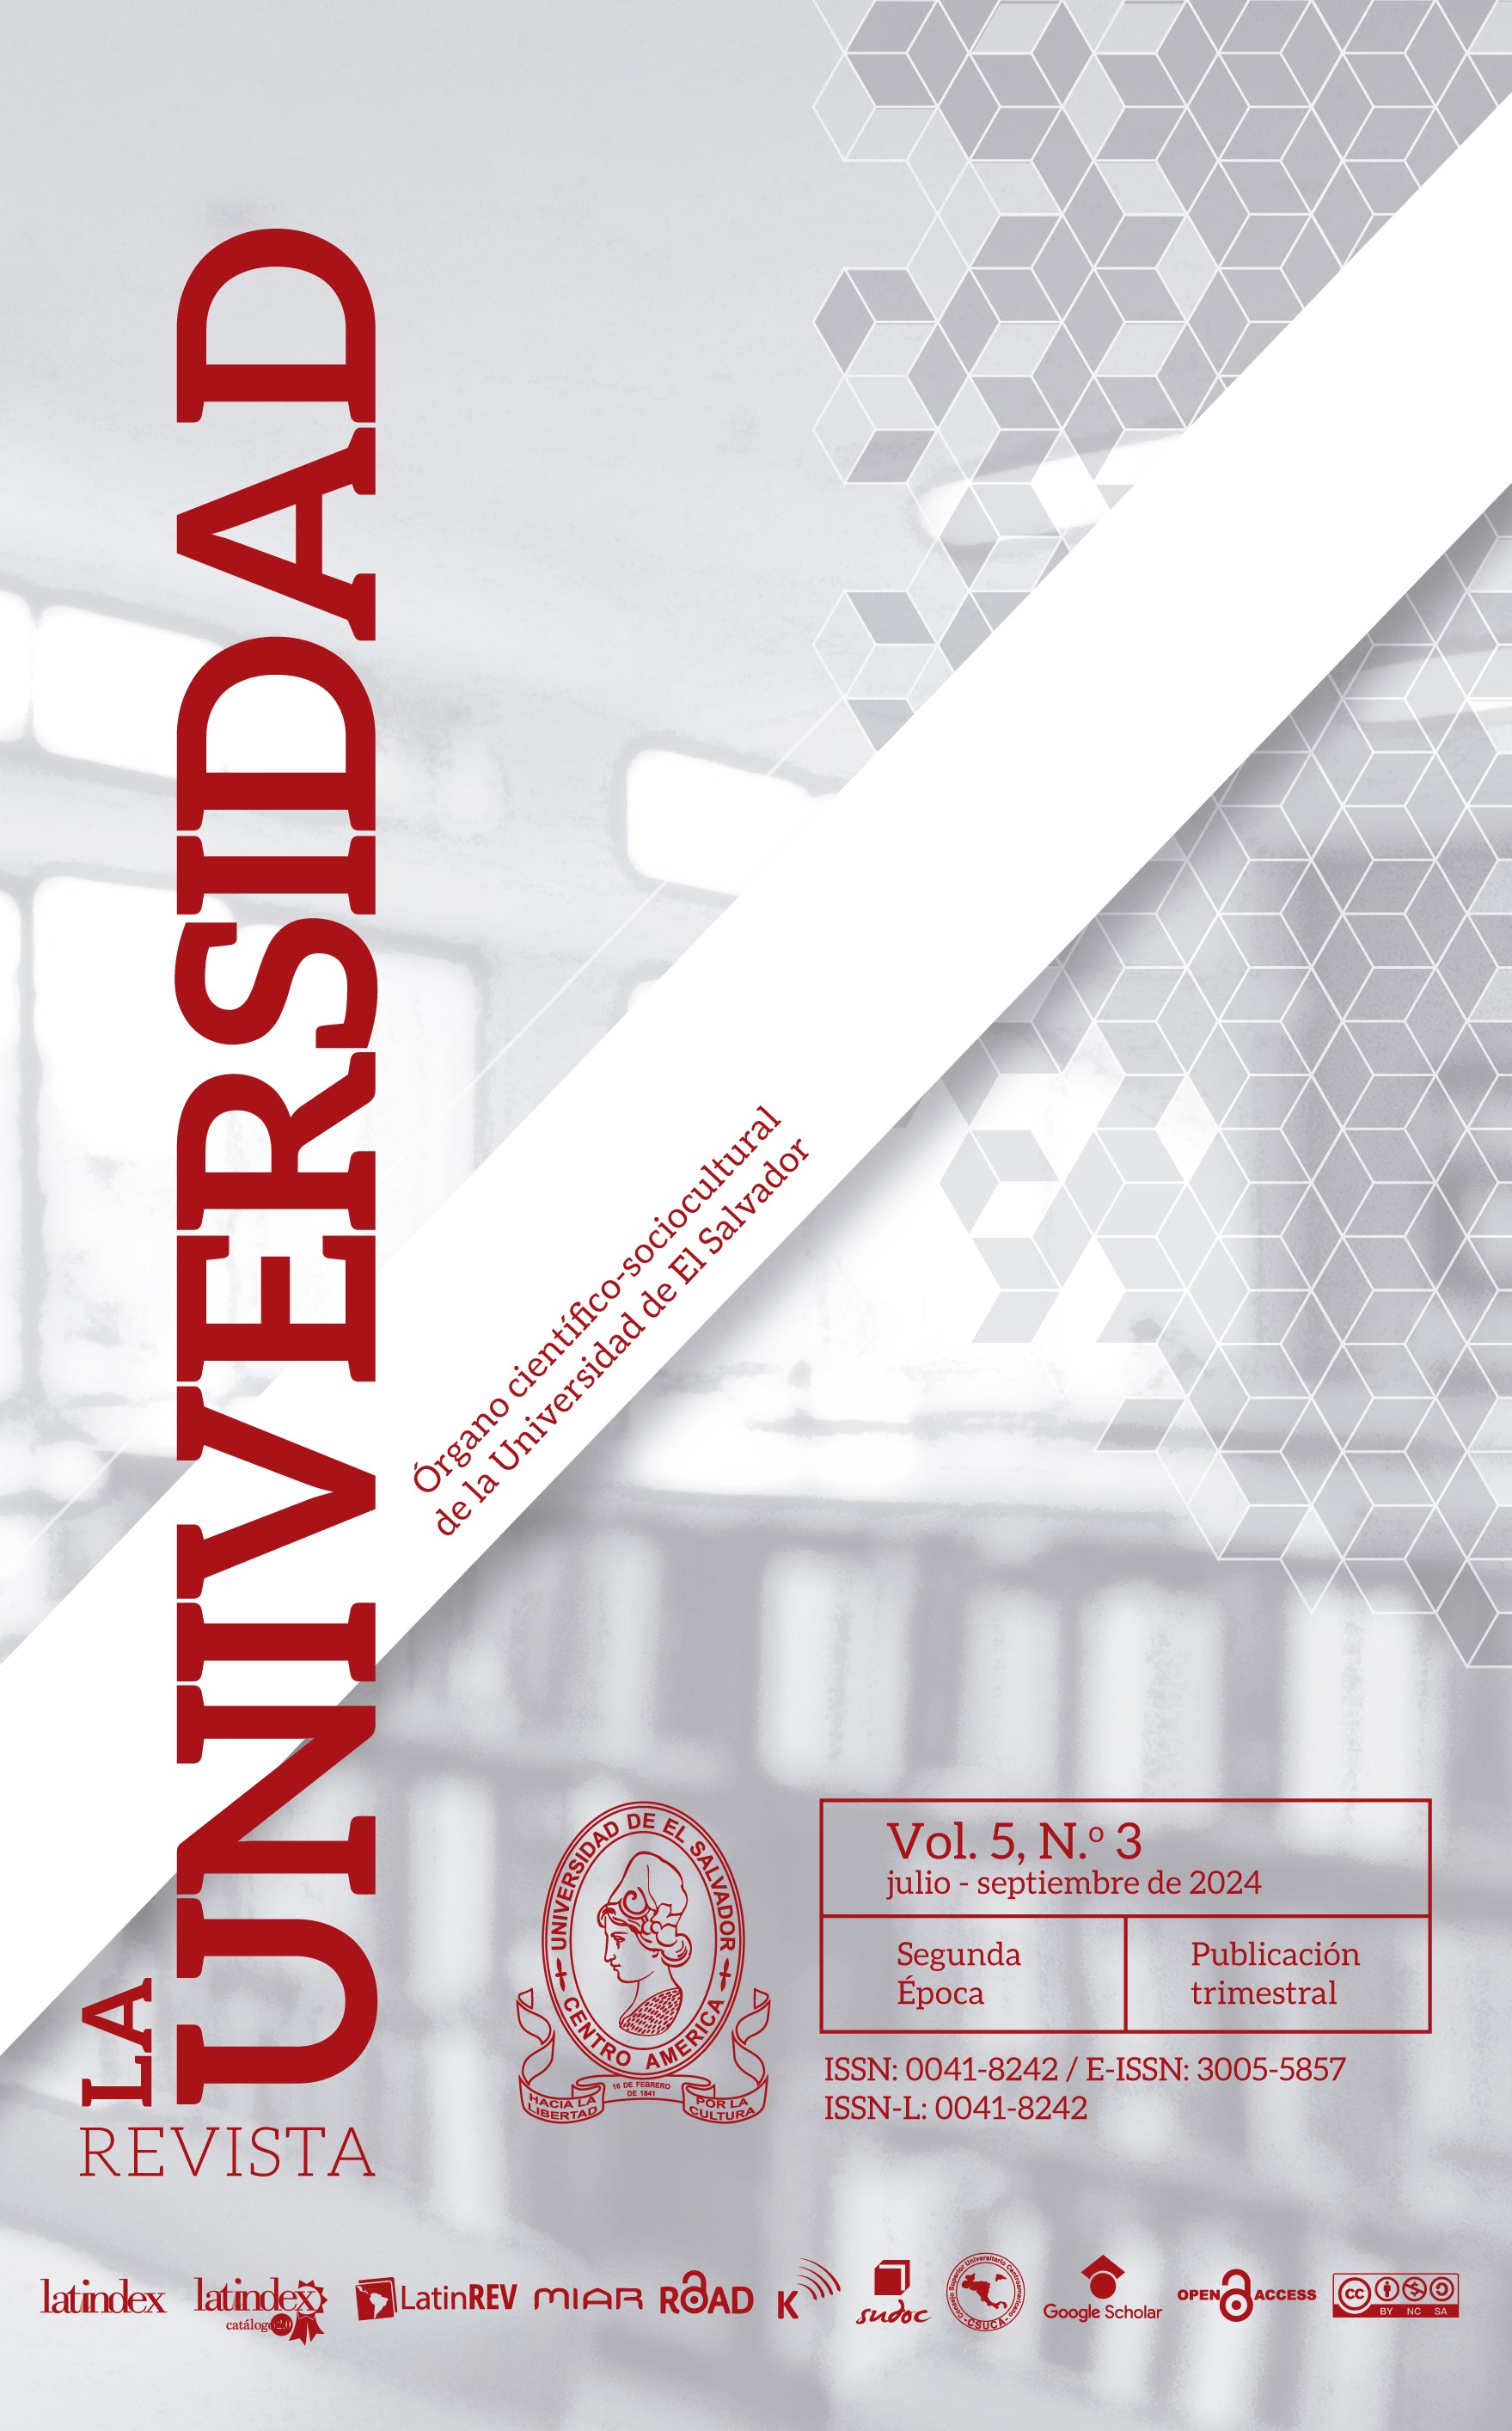 					View The Second Era University, Volume 5 No. 3, July - September 2024
				